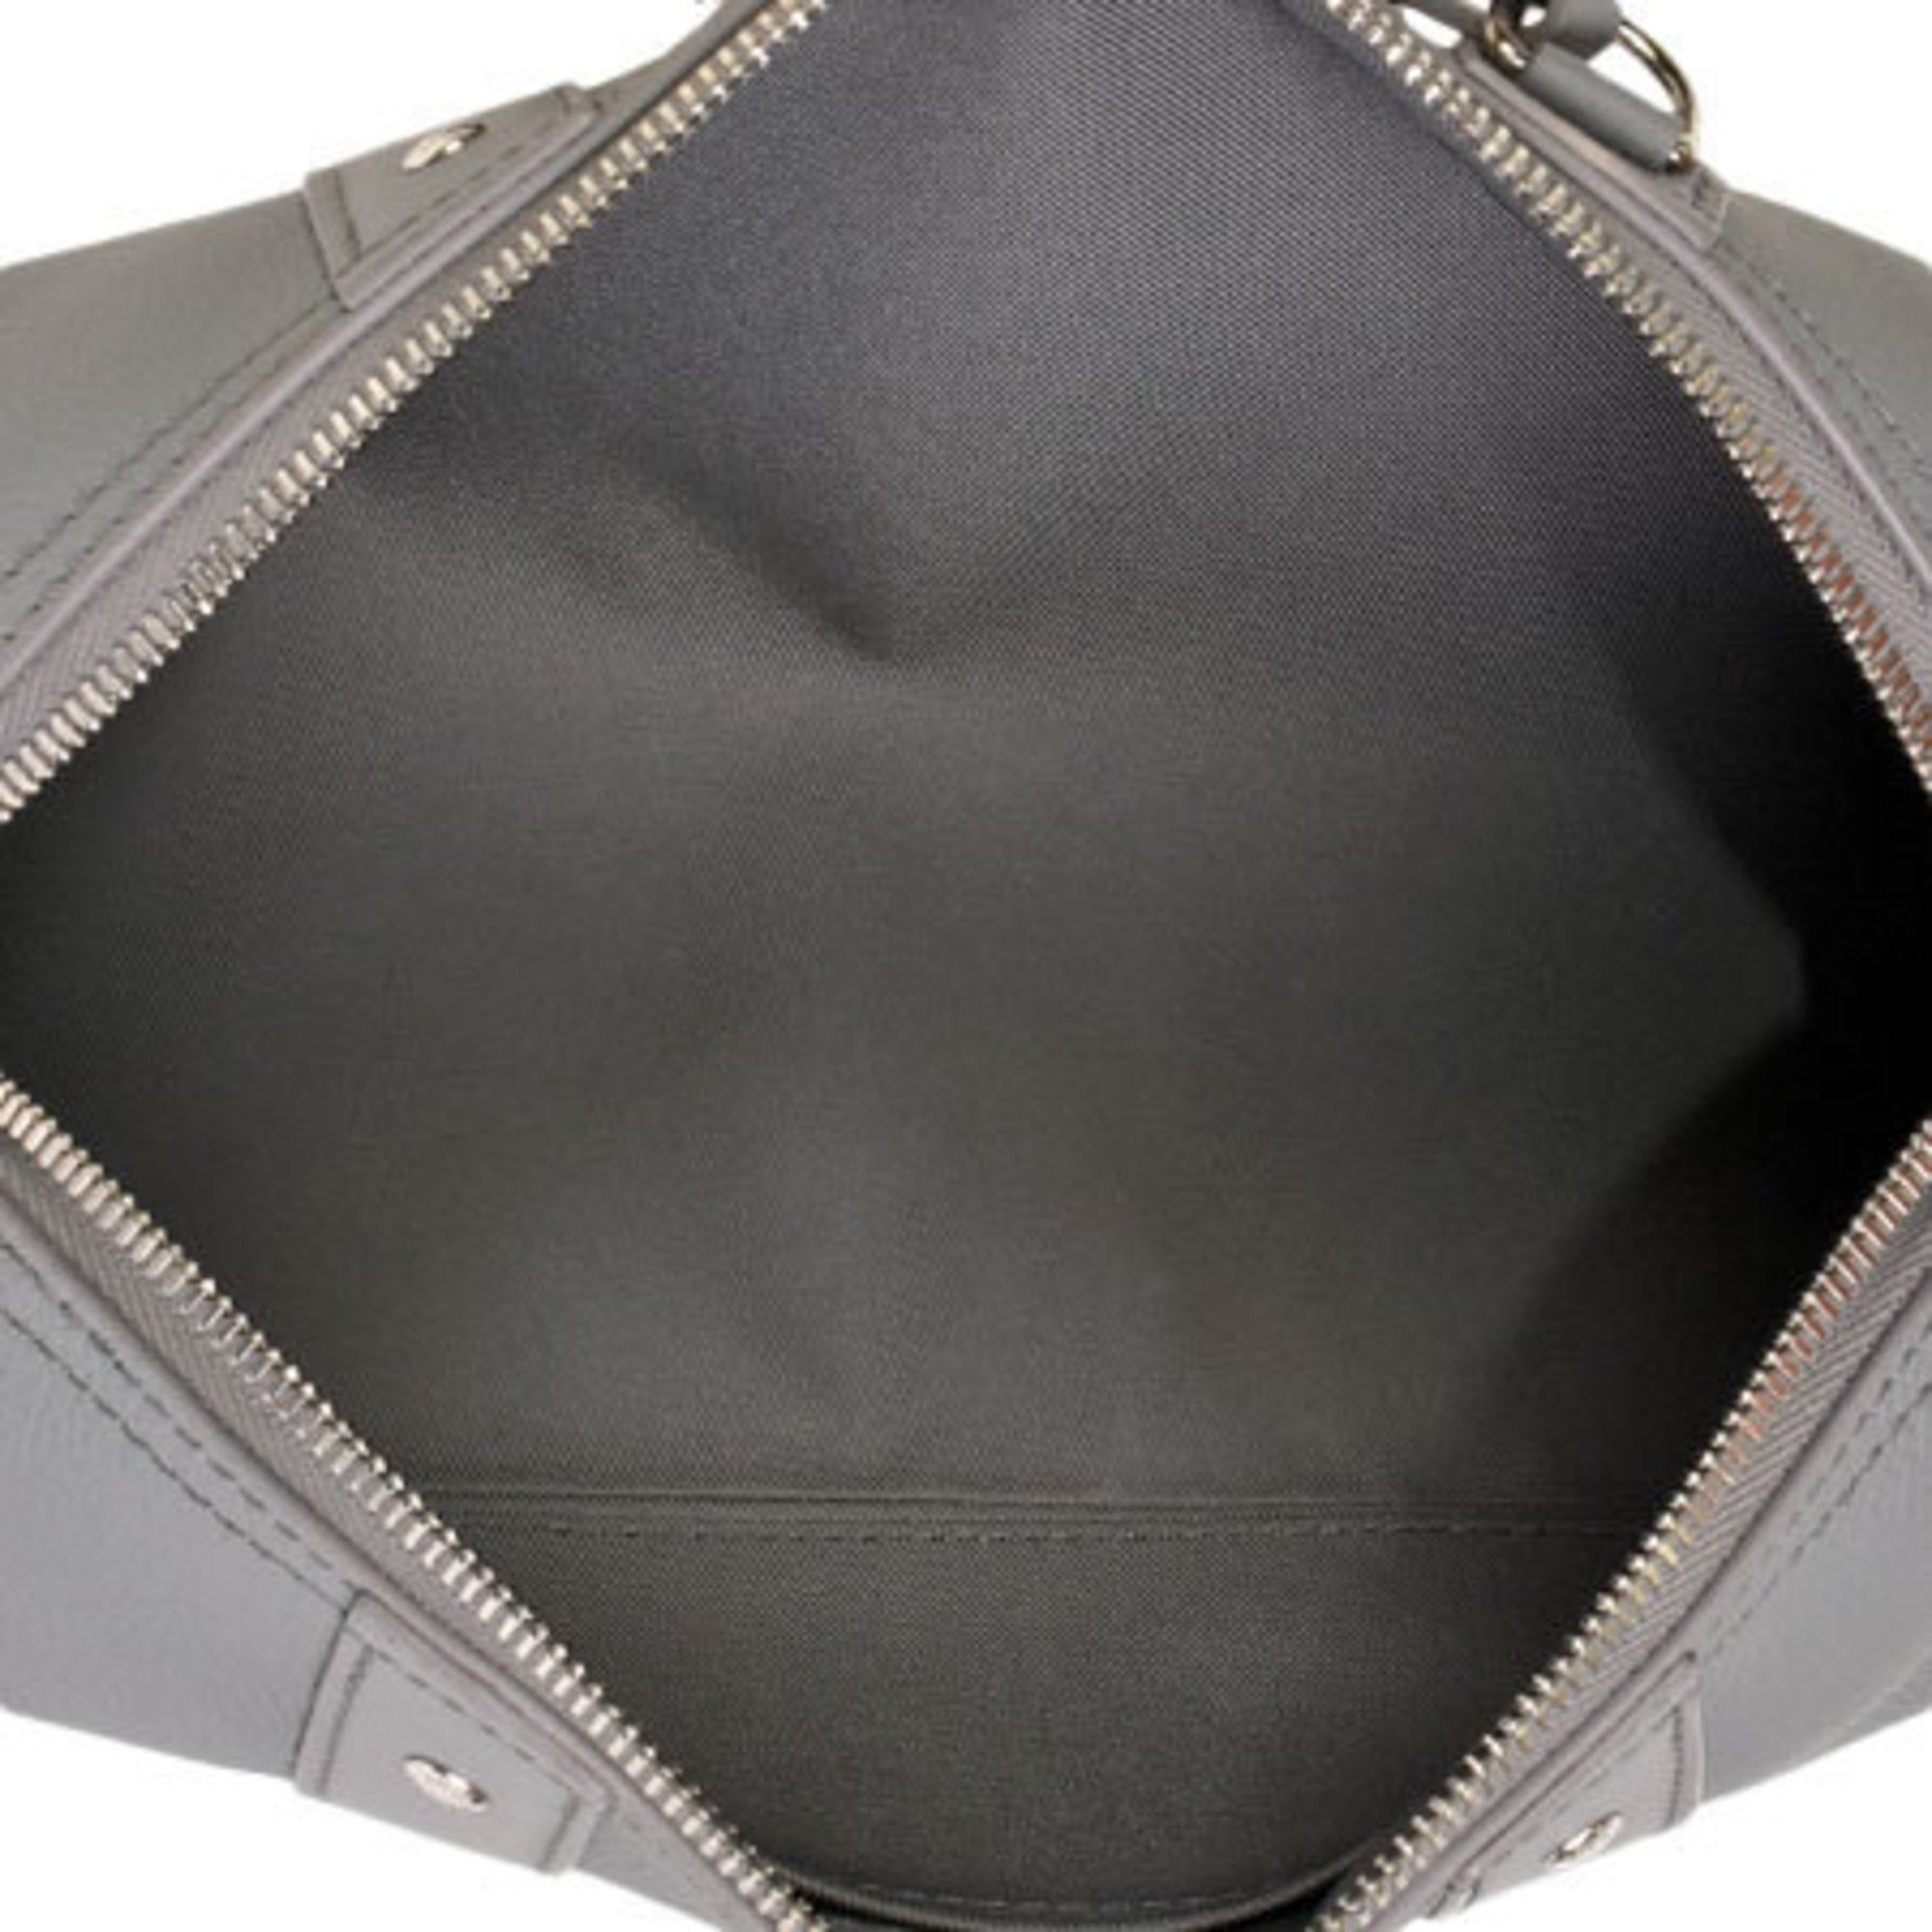 City Keepall Bag - Luxury All Bags - Bags, Men M59328